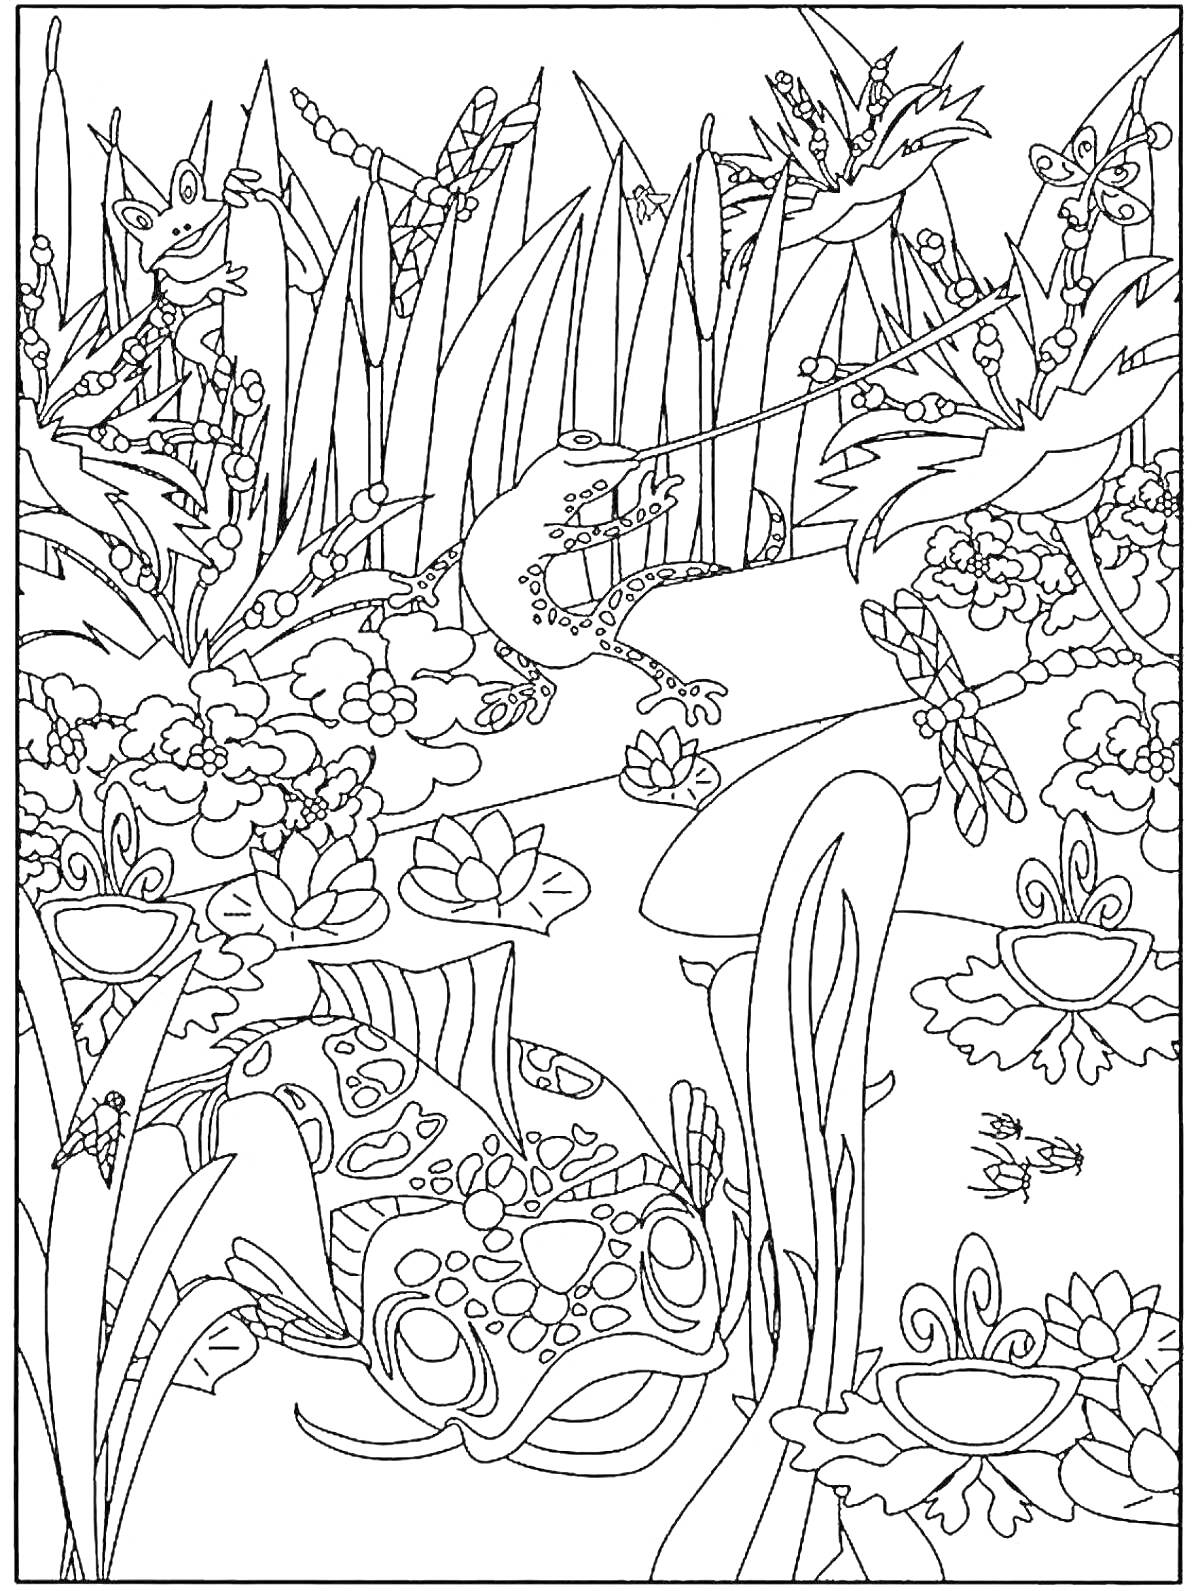 Раскраска Болото с лягушками, стрекозами, лилиями и тростником